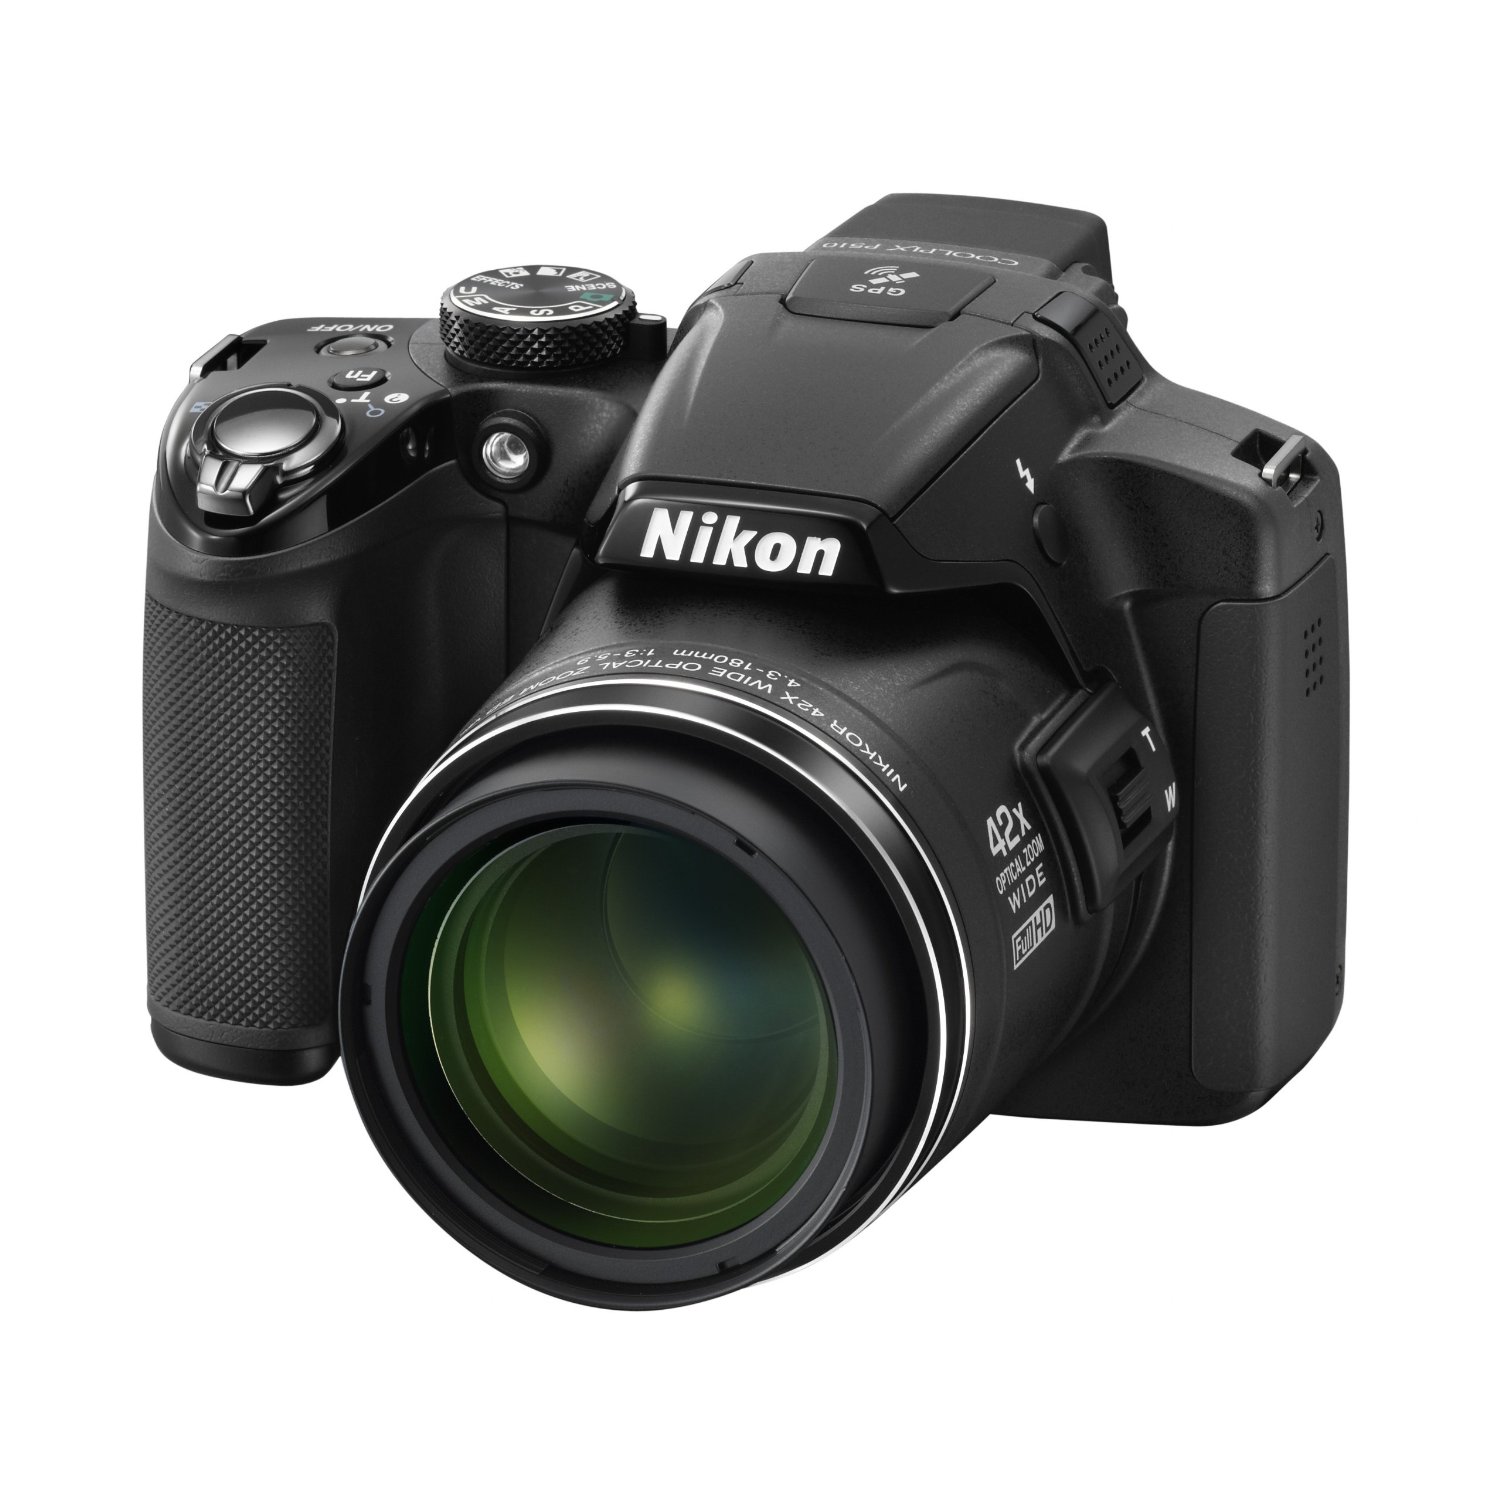  Nikon  COOLPIX P510 16 1 MP CMOS Digital Camera  Reviews 